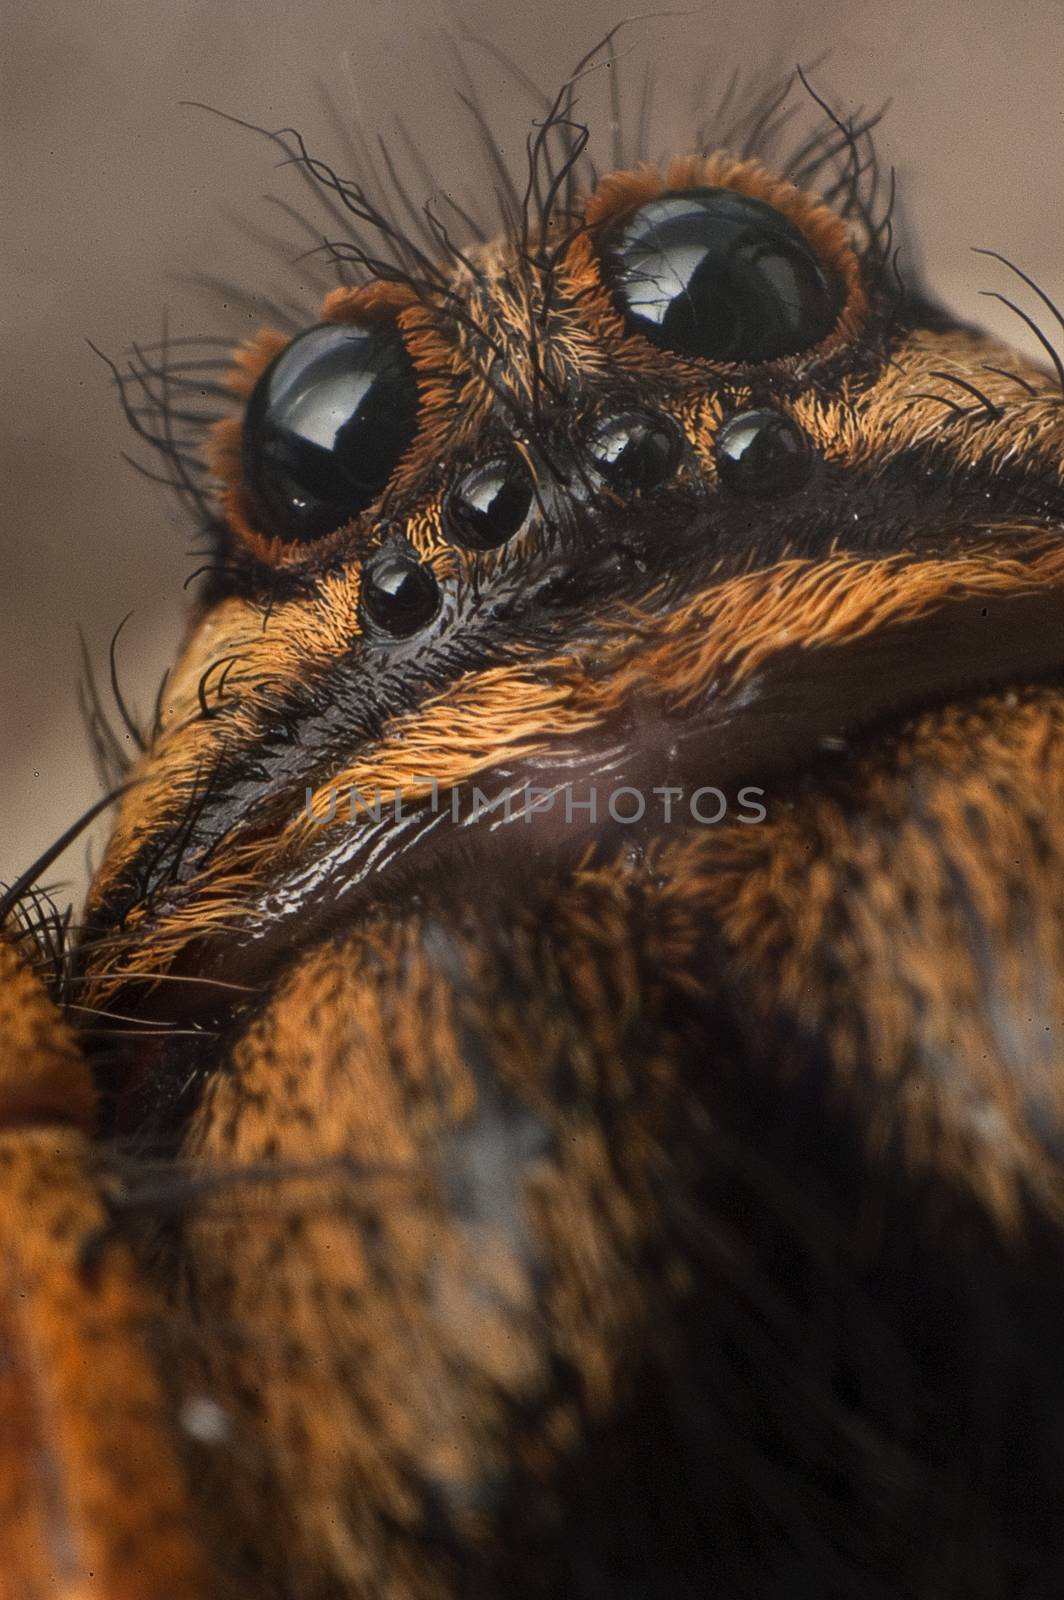 Closeup wolf spider species,Lycosa tarantula